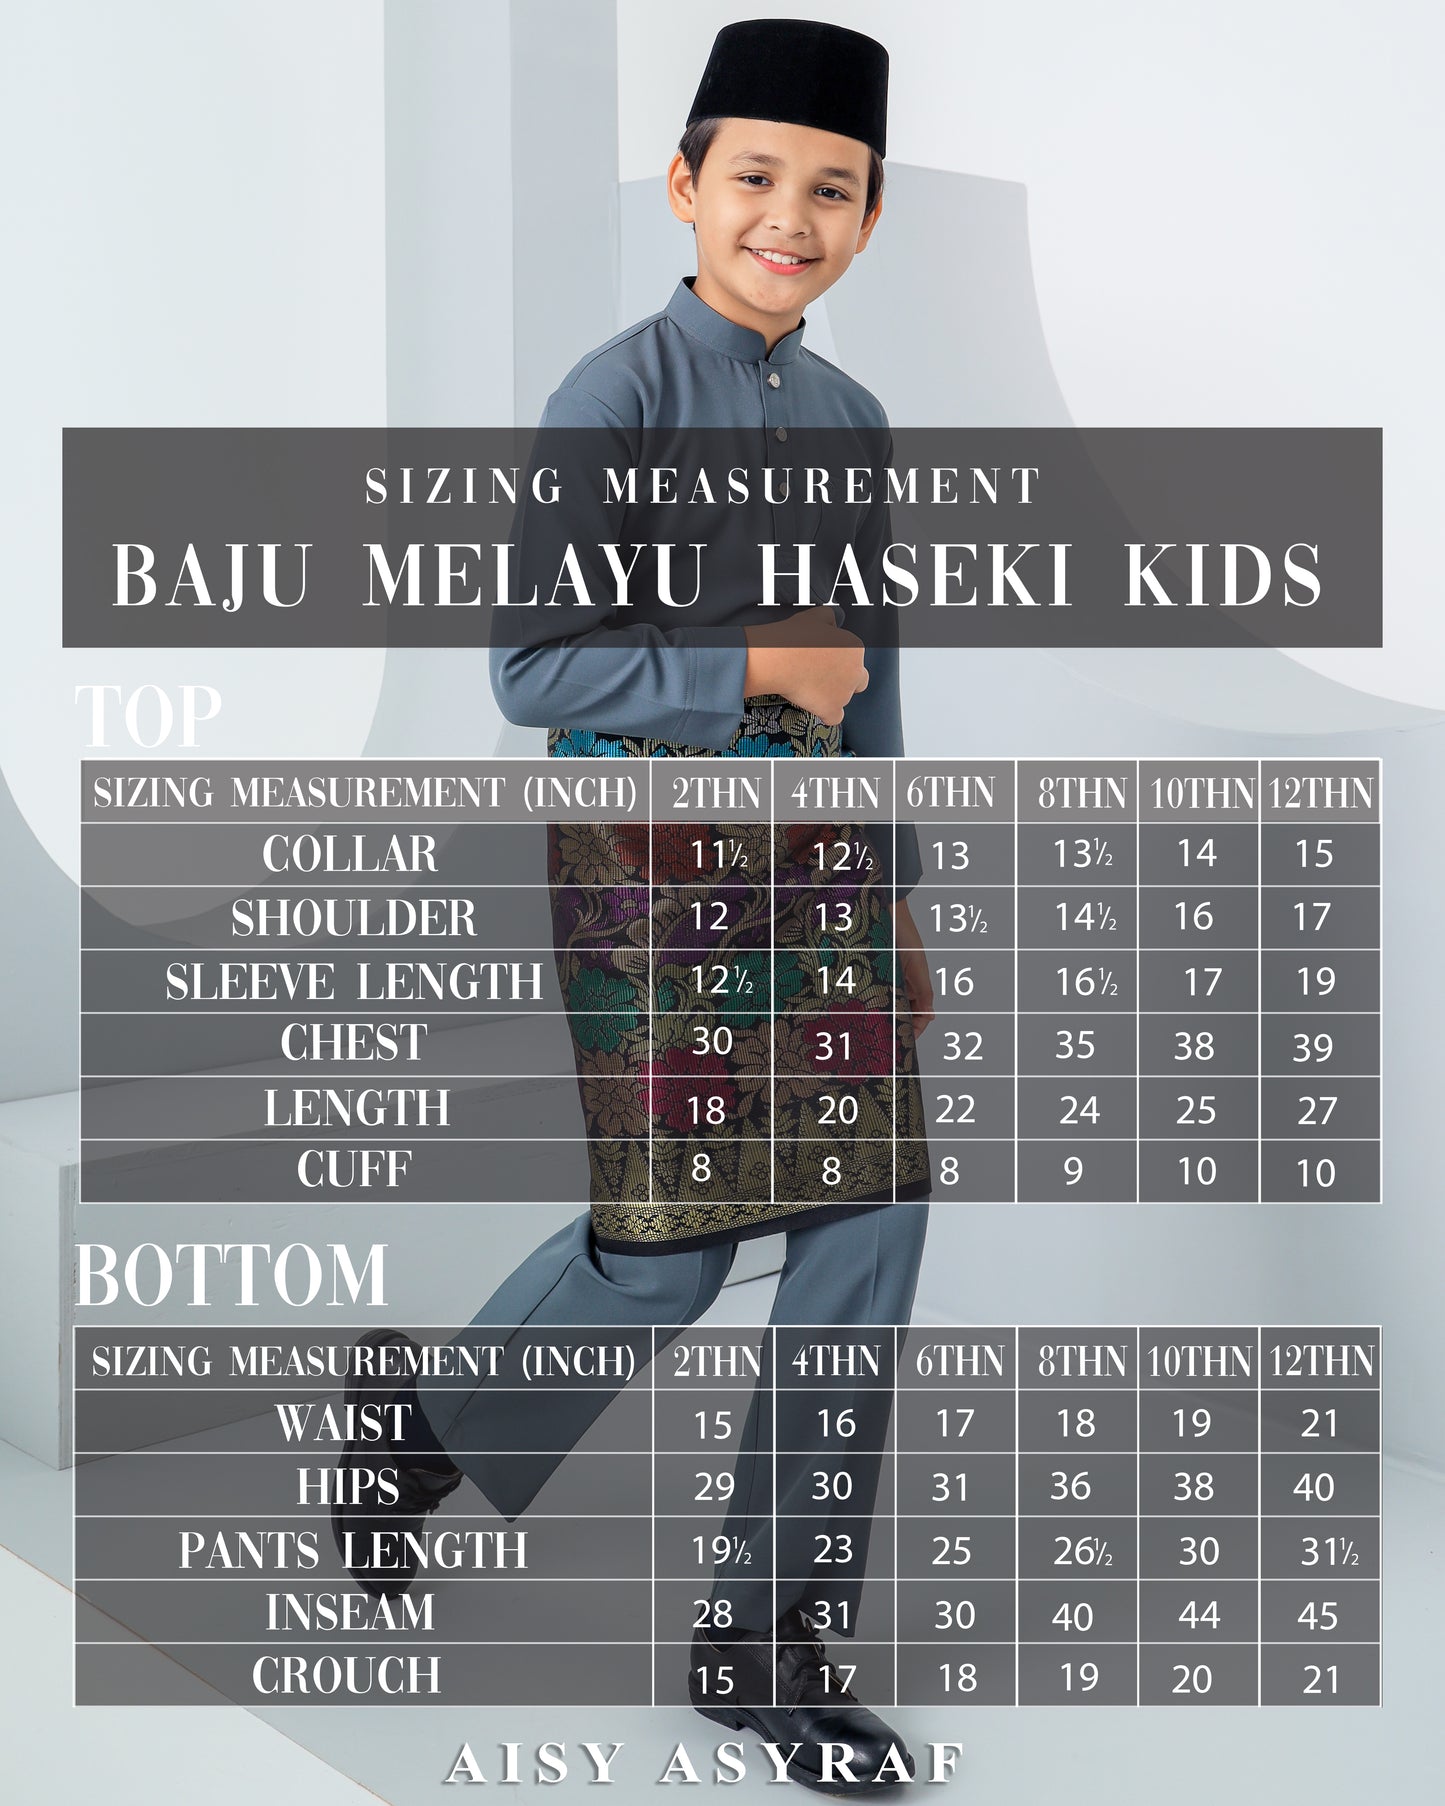 Baju Melayu Haseki Kids - Navy Blue